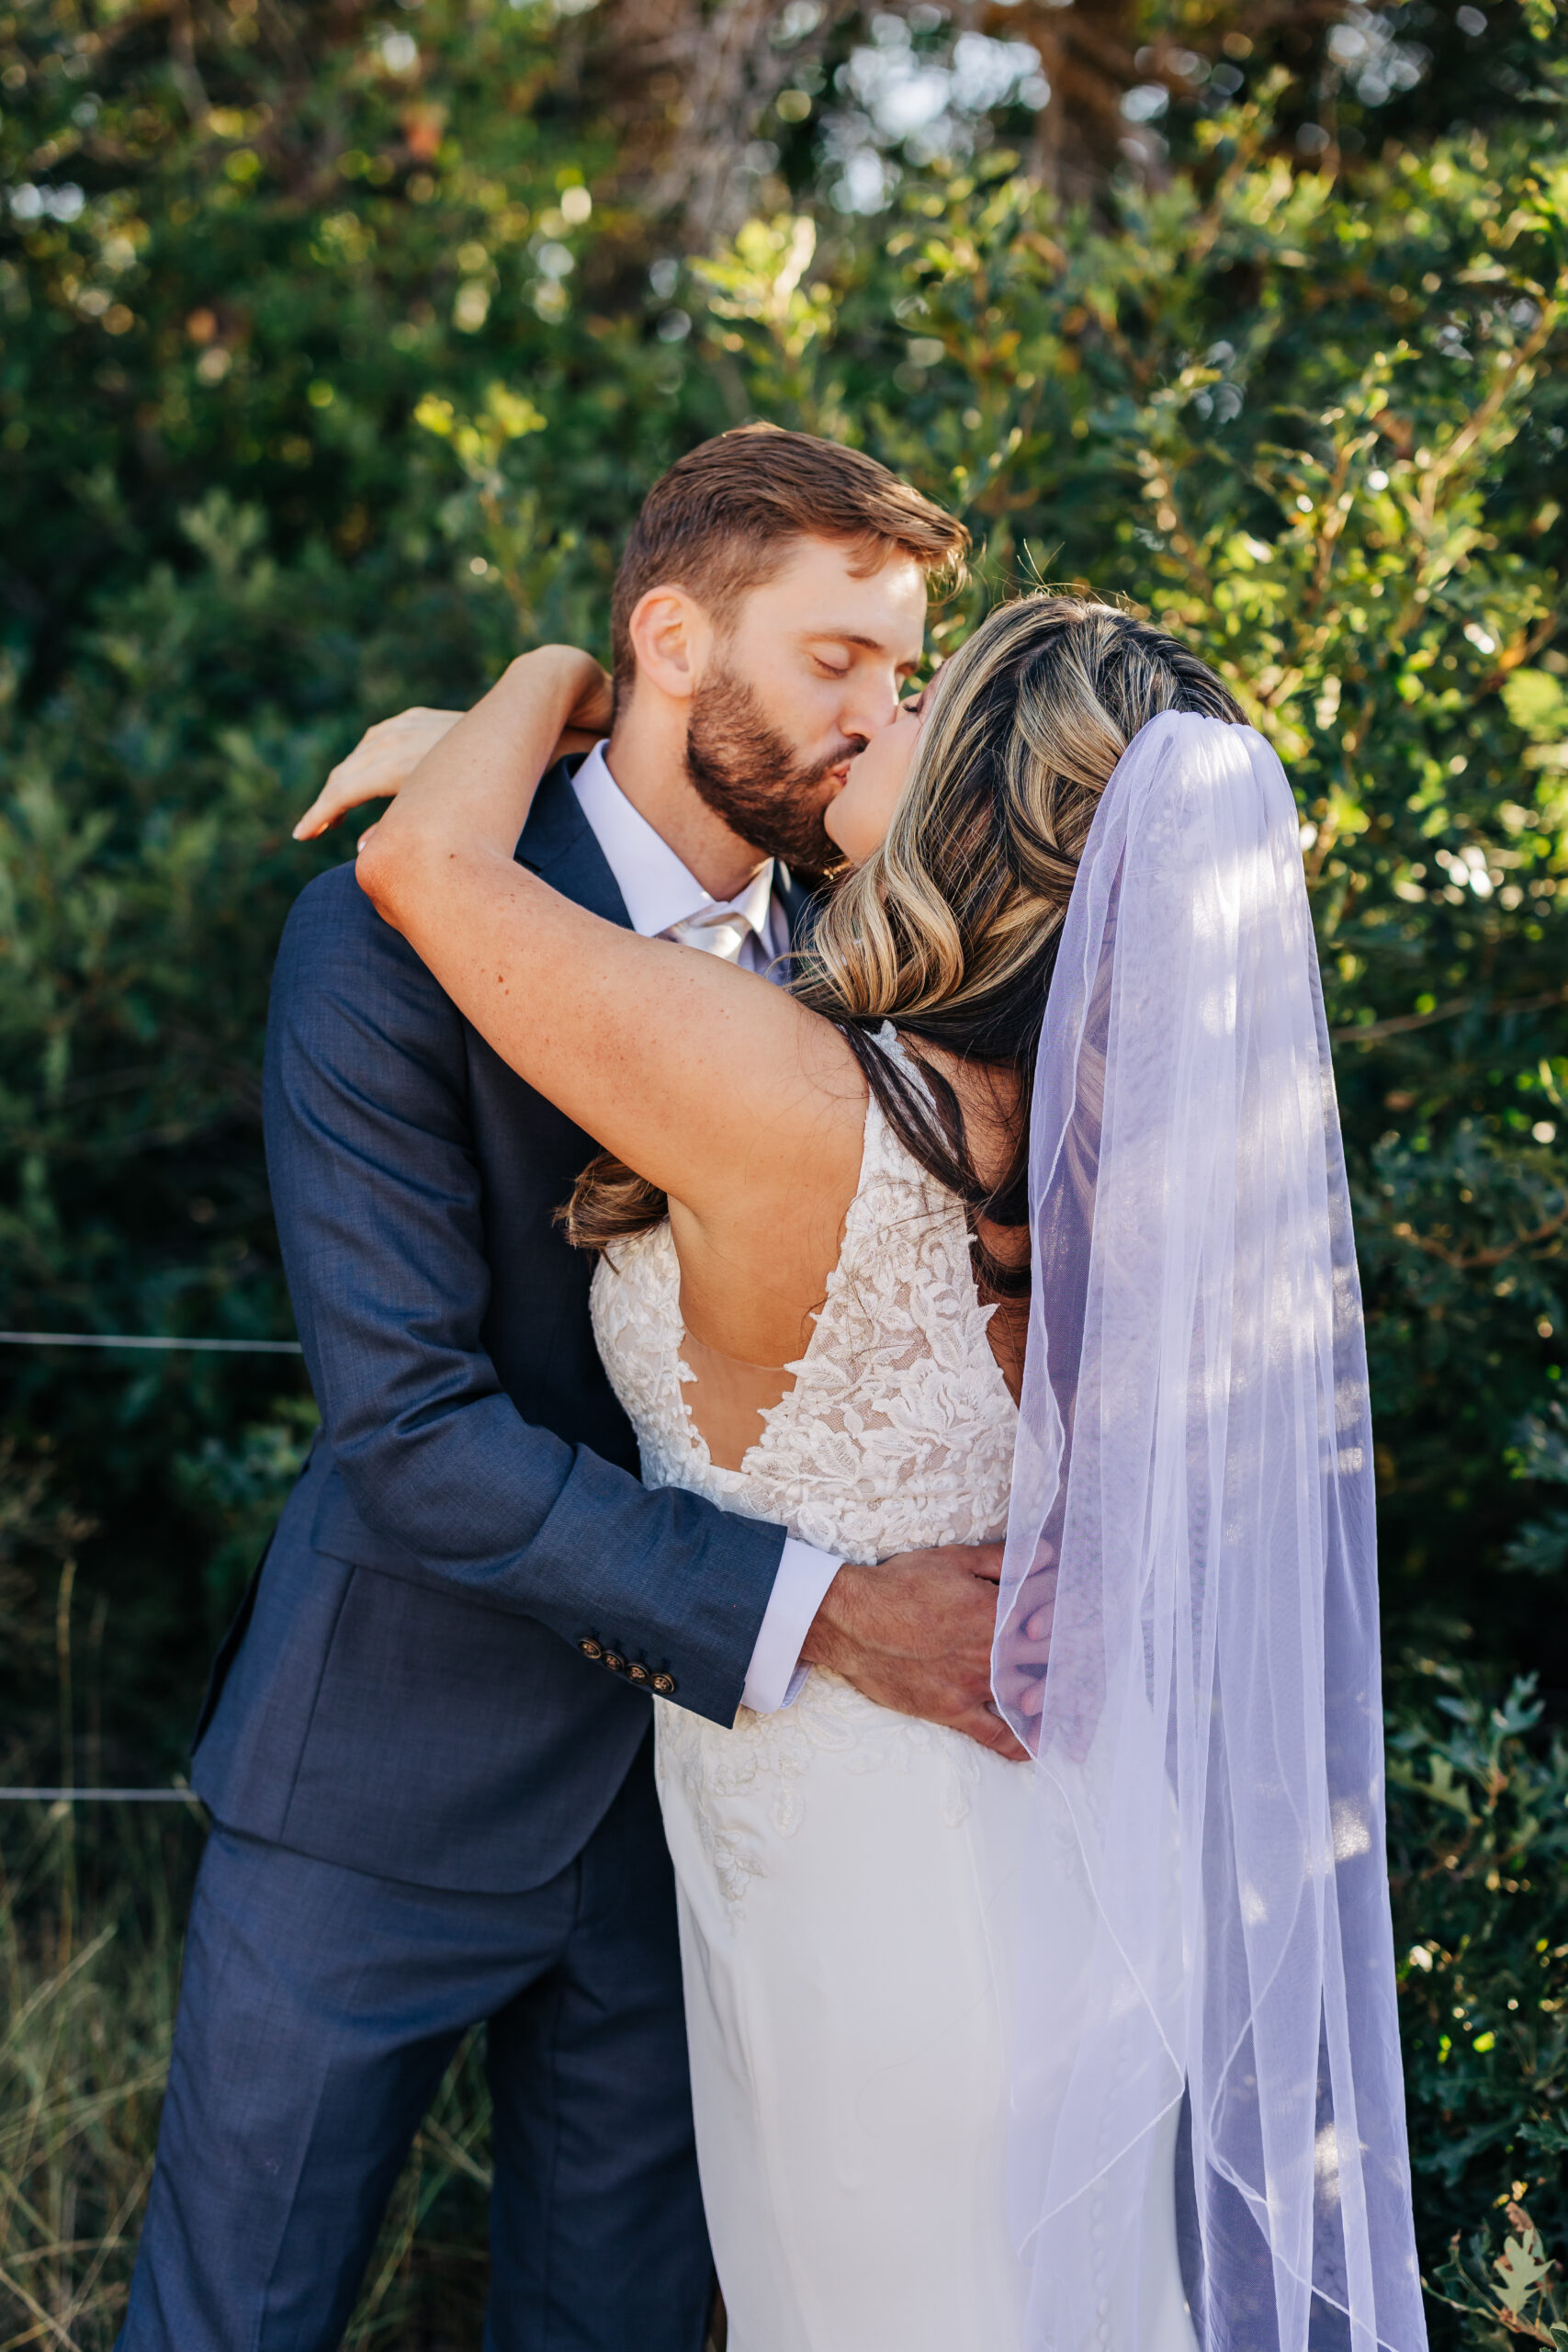 Denver Elopement Photographer captures bride and groom embracing while bride kisses groom